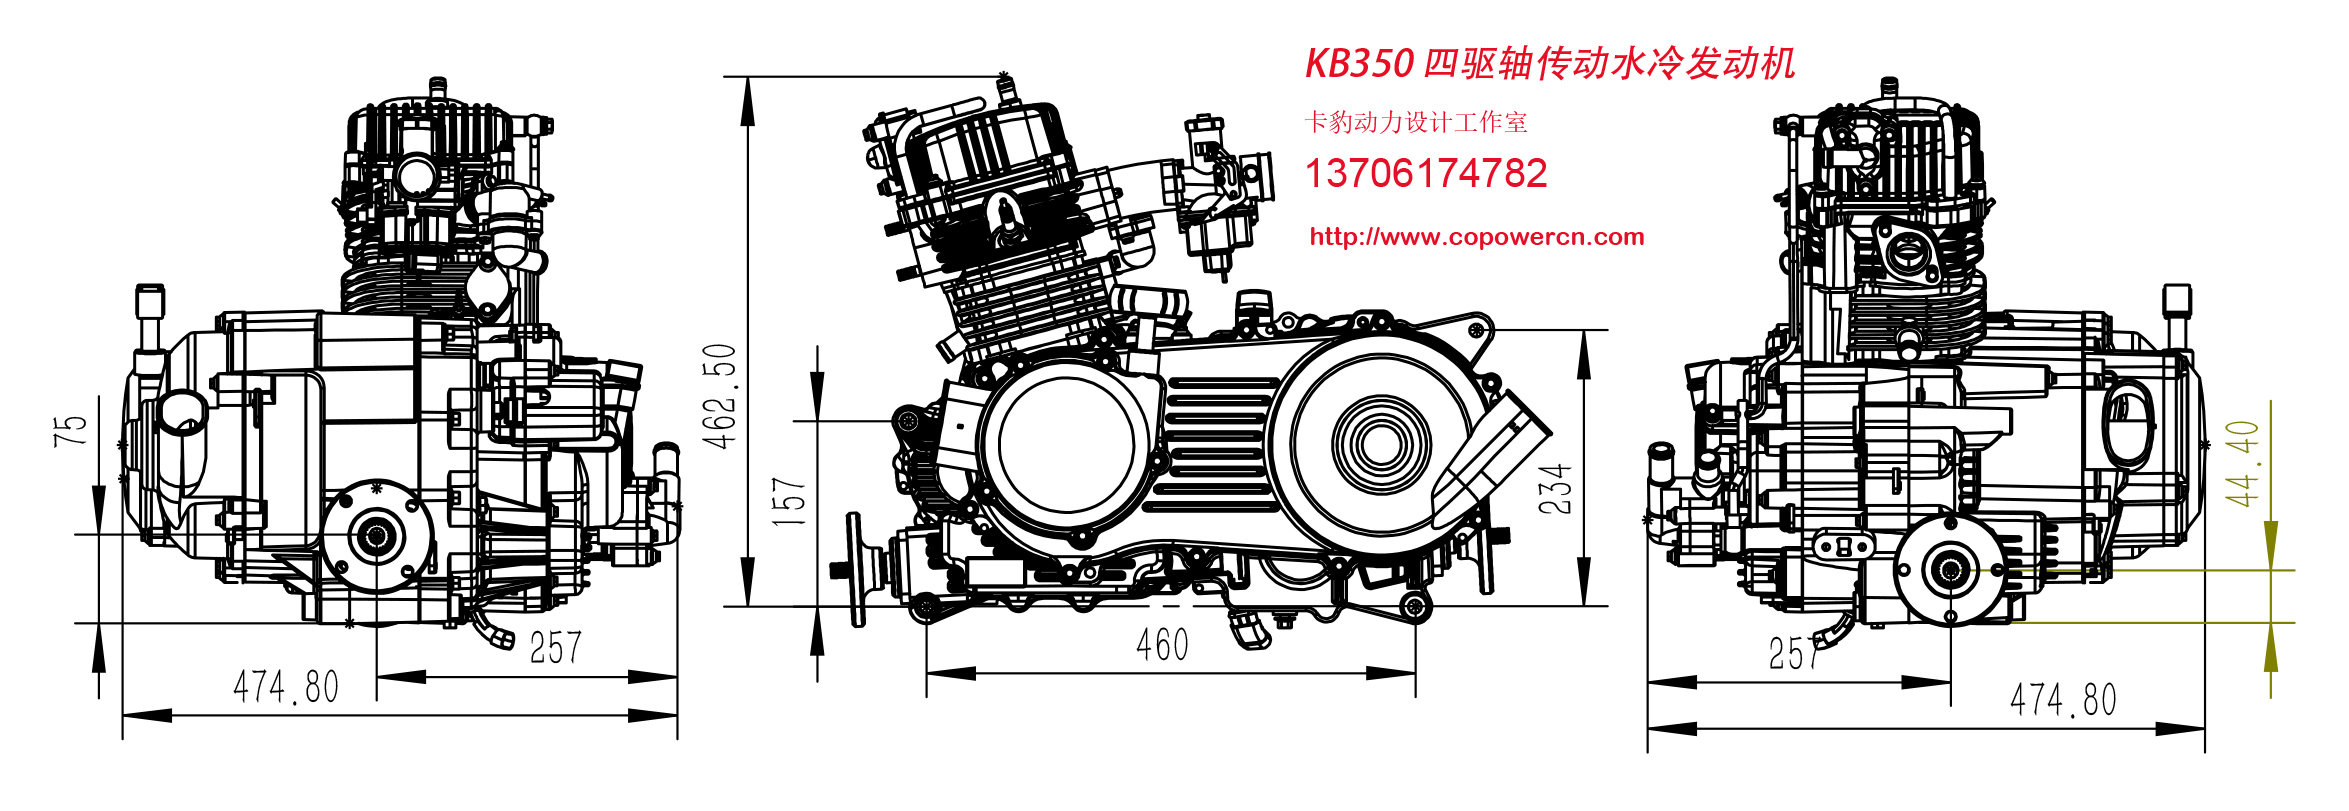 KB350轴传动发动机-尺寸图.jpg